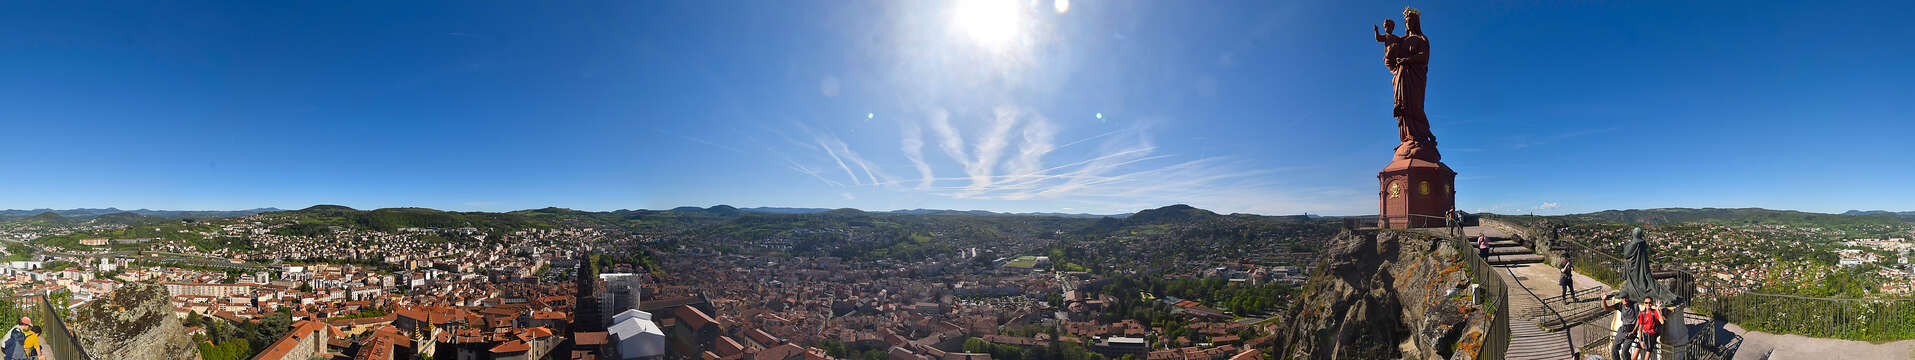 Webcam de la estatua de Notre-Dame de France 360° en Le Puy-en-Velay